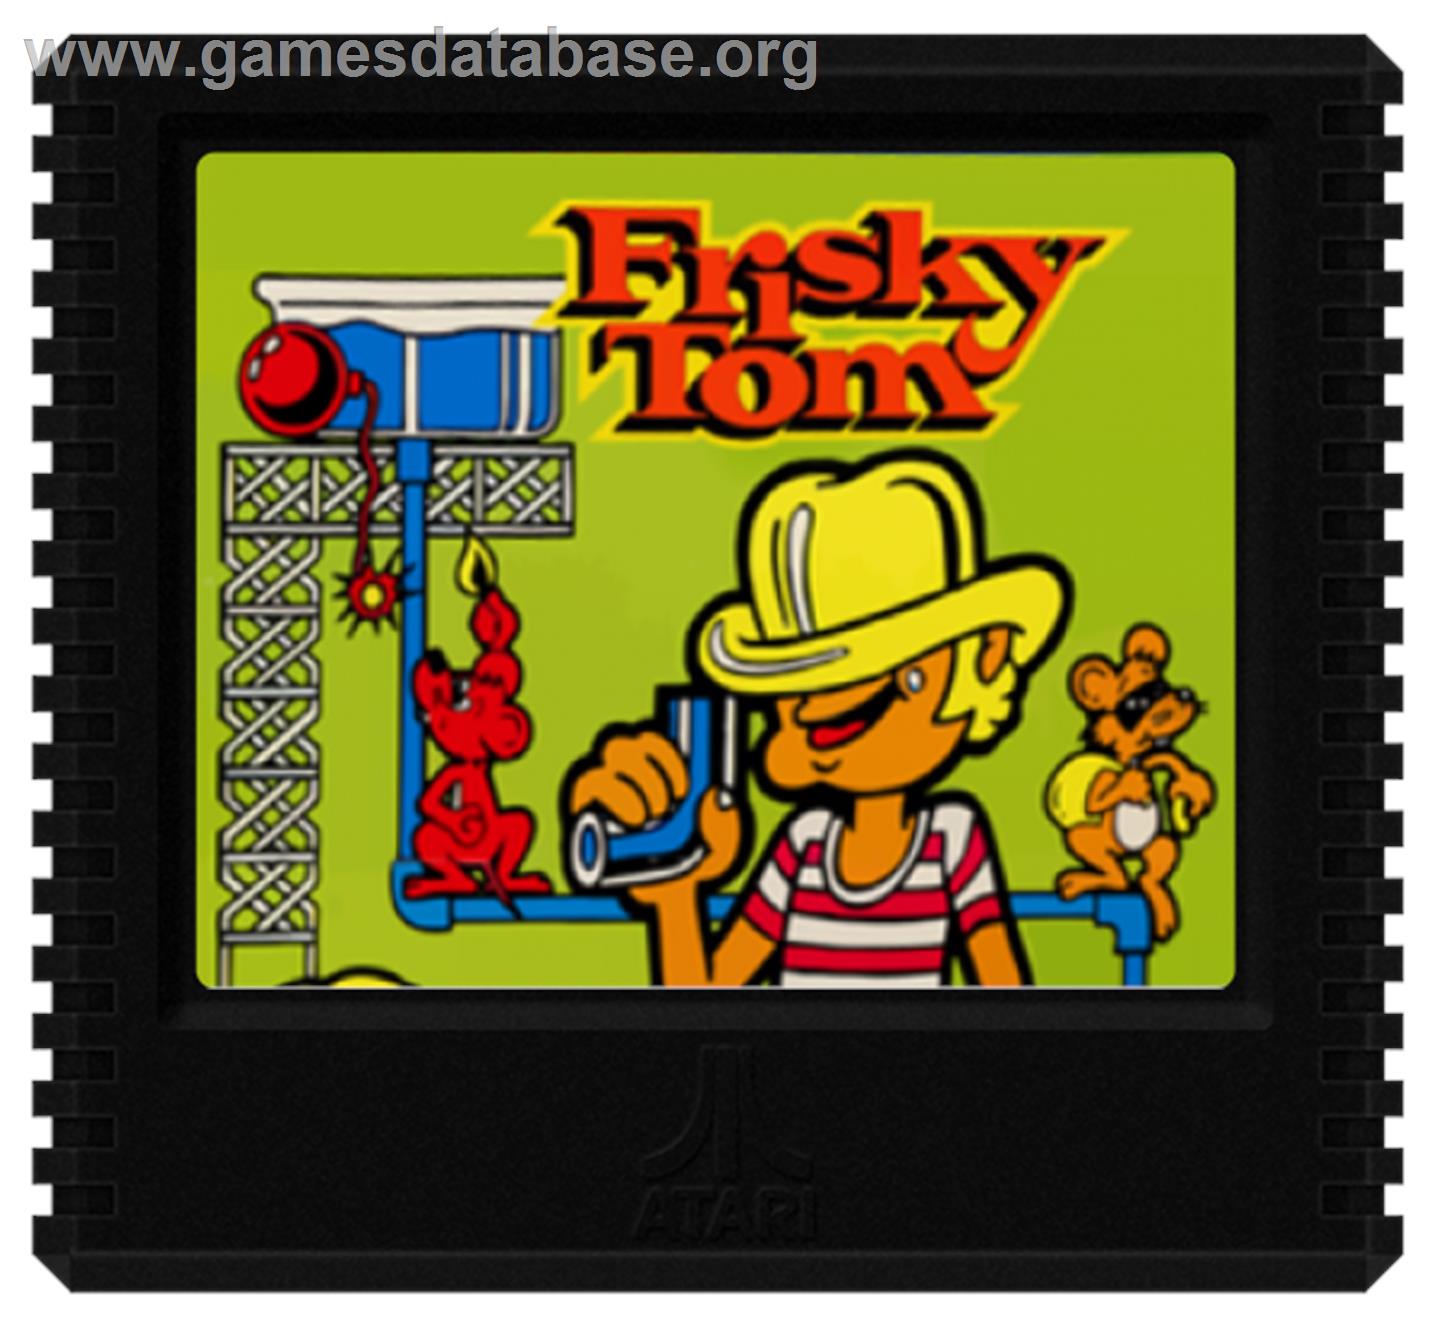 Frisky Tom - Atari 5200 - Artwork - Cartridge